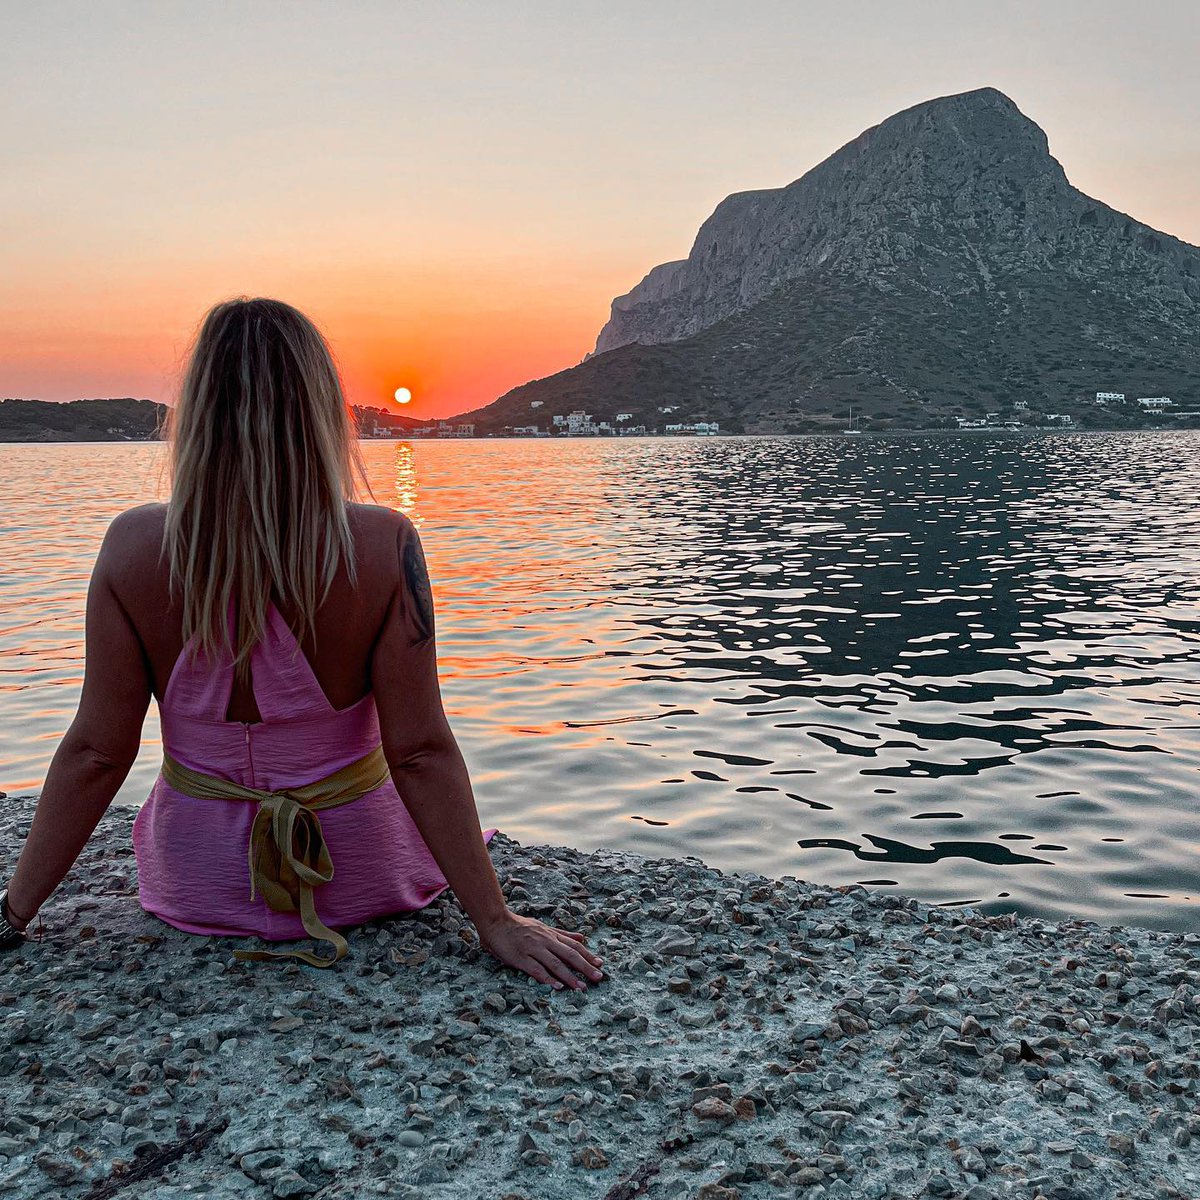 Watching the #sunset at #Massouri #beach… a beautiful moment on #Kalymnos #Island!

kalymnos-isl.gr/en

📸 : Dajana (instagram.com/daja87_)

#visitkalymnos #visitkalymnosisland #Kalymnos #kalymnosisland #travelkalymnos #visitgreece #Greece #kalymnosclimbing  #rockclimbing